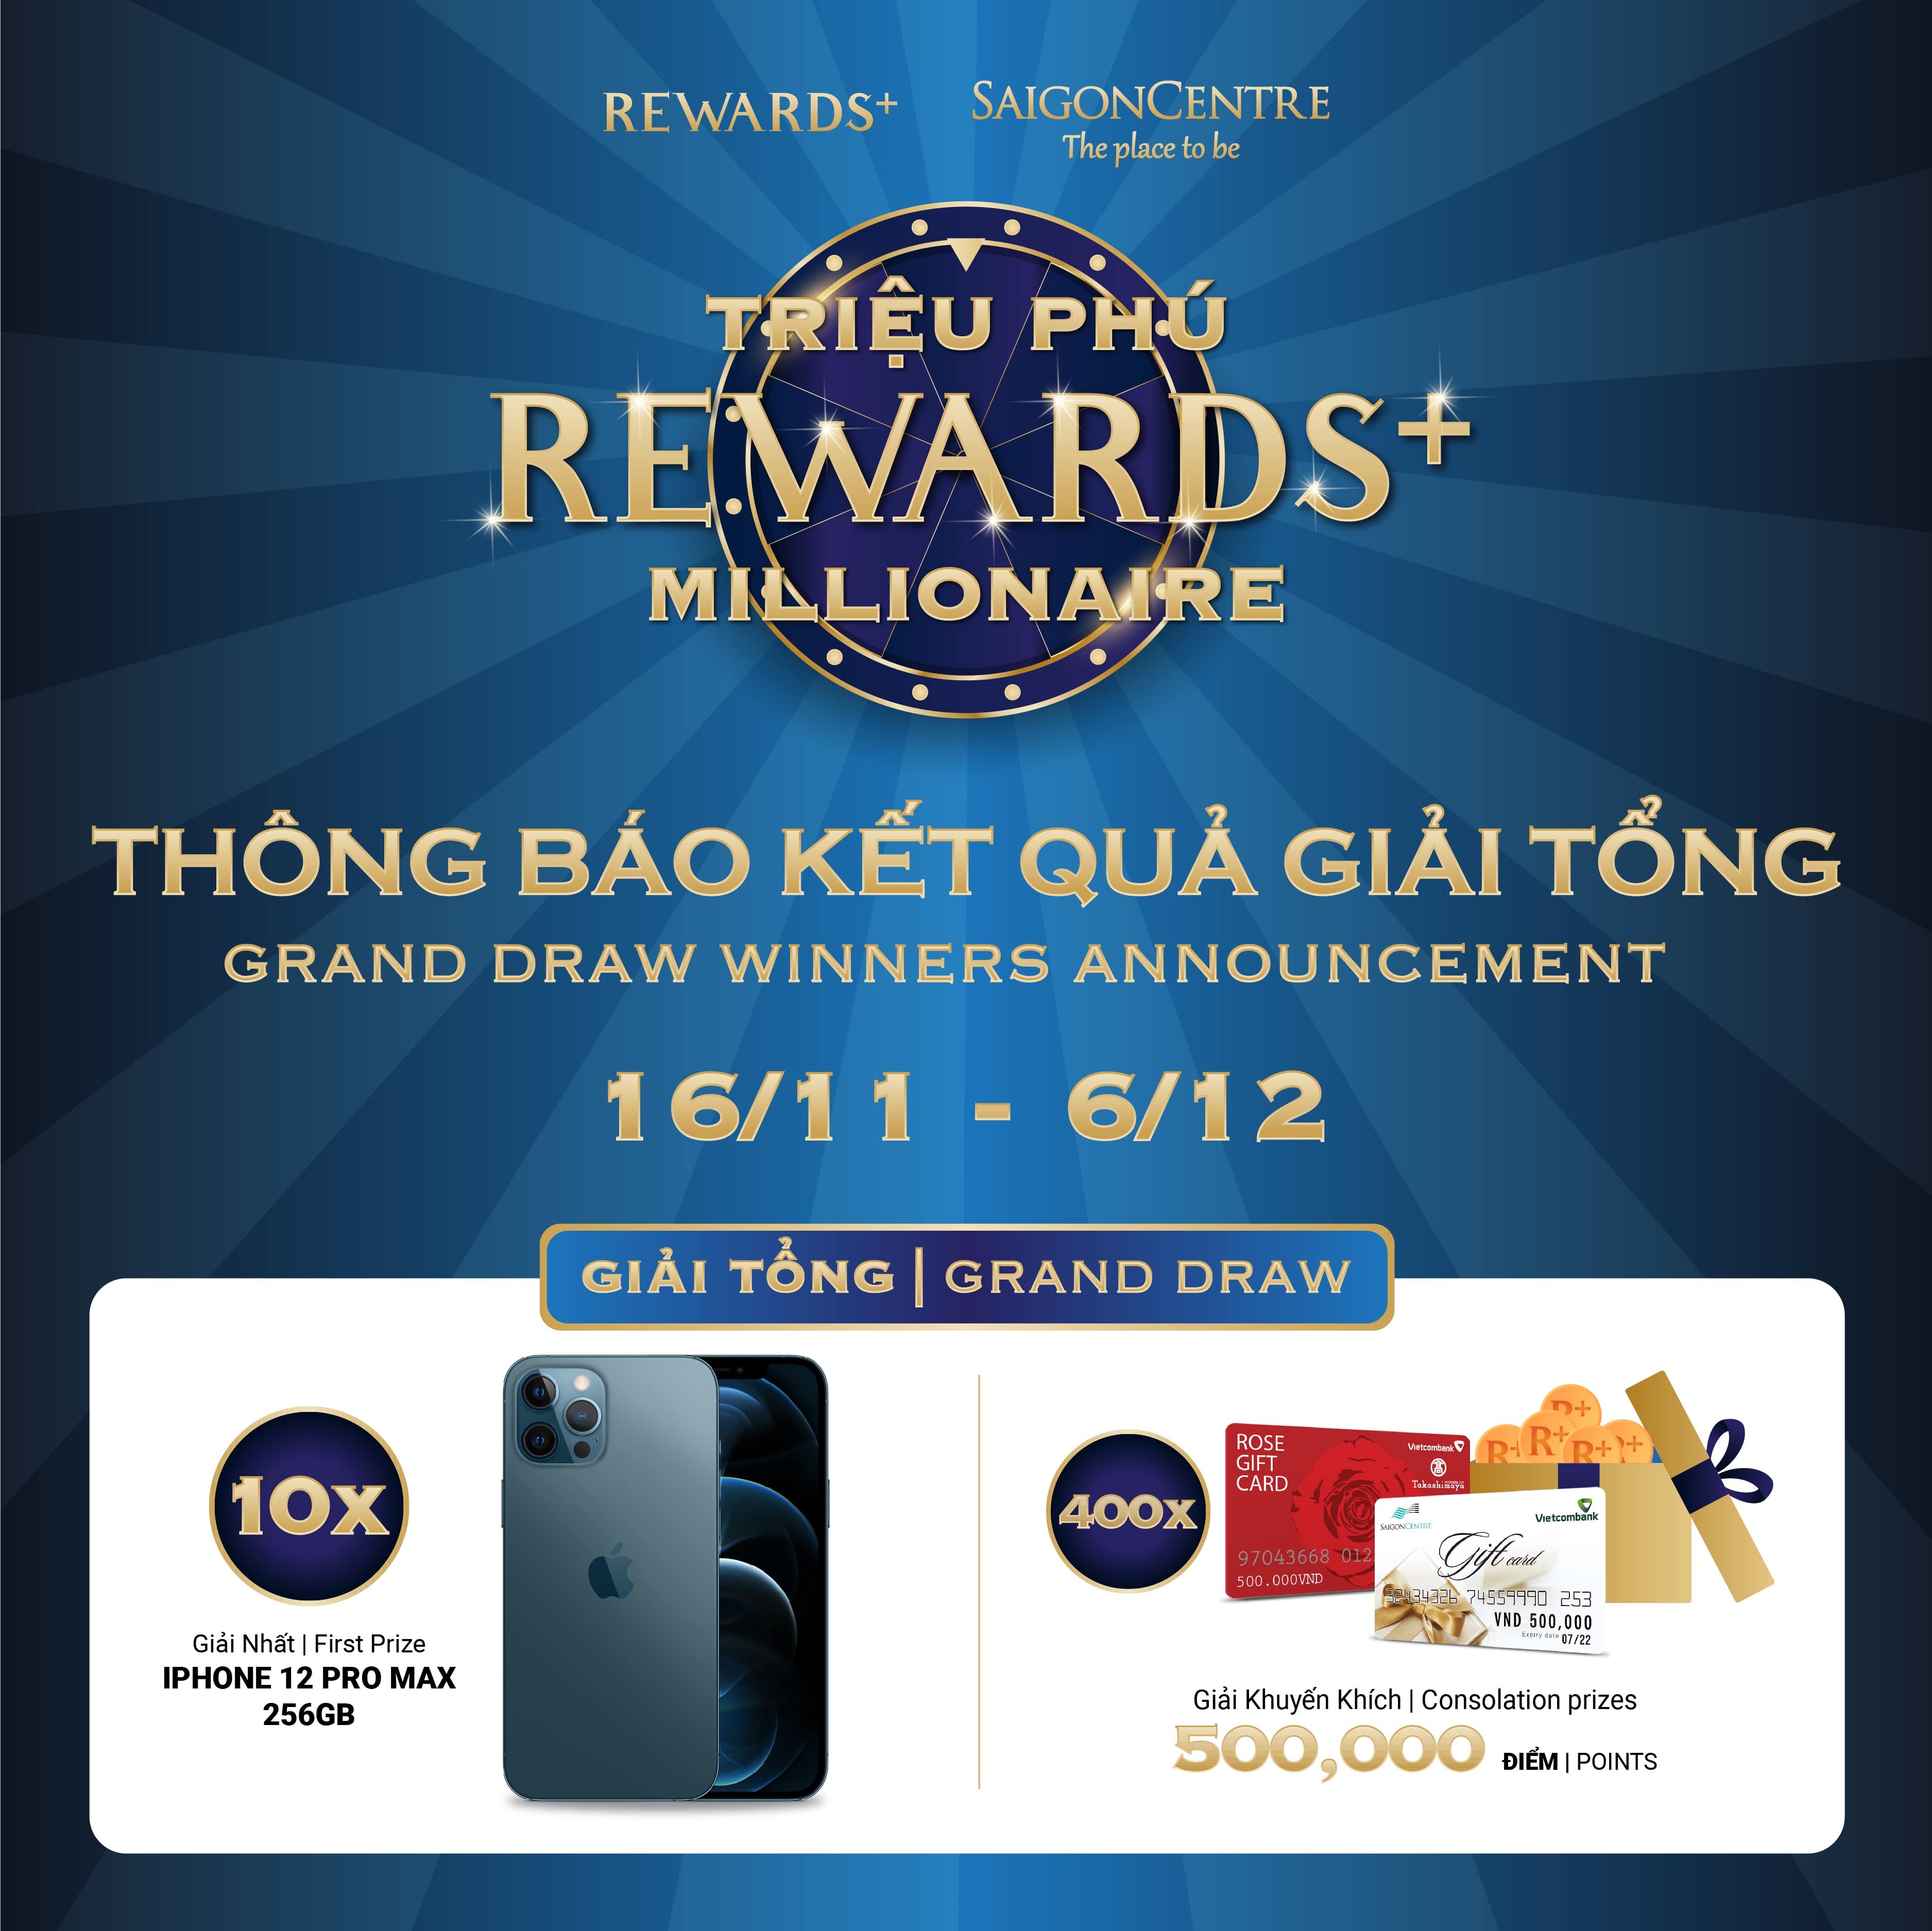 REWARDS+ MILLIONAIRE - GRAND DRAW WINNERS ANNOUNCEMENT